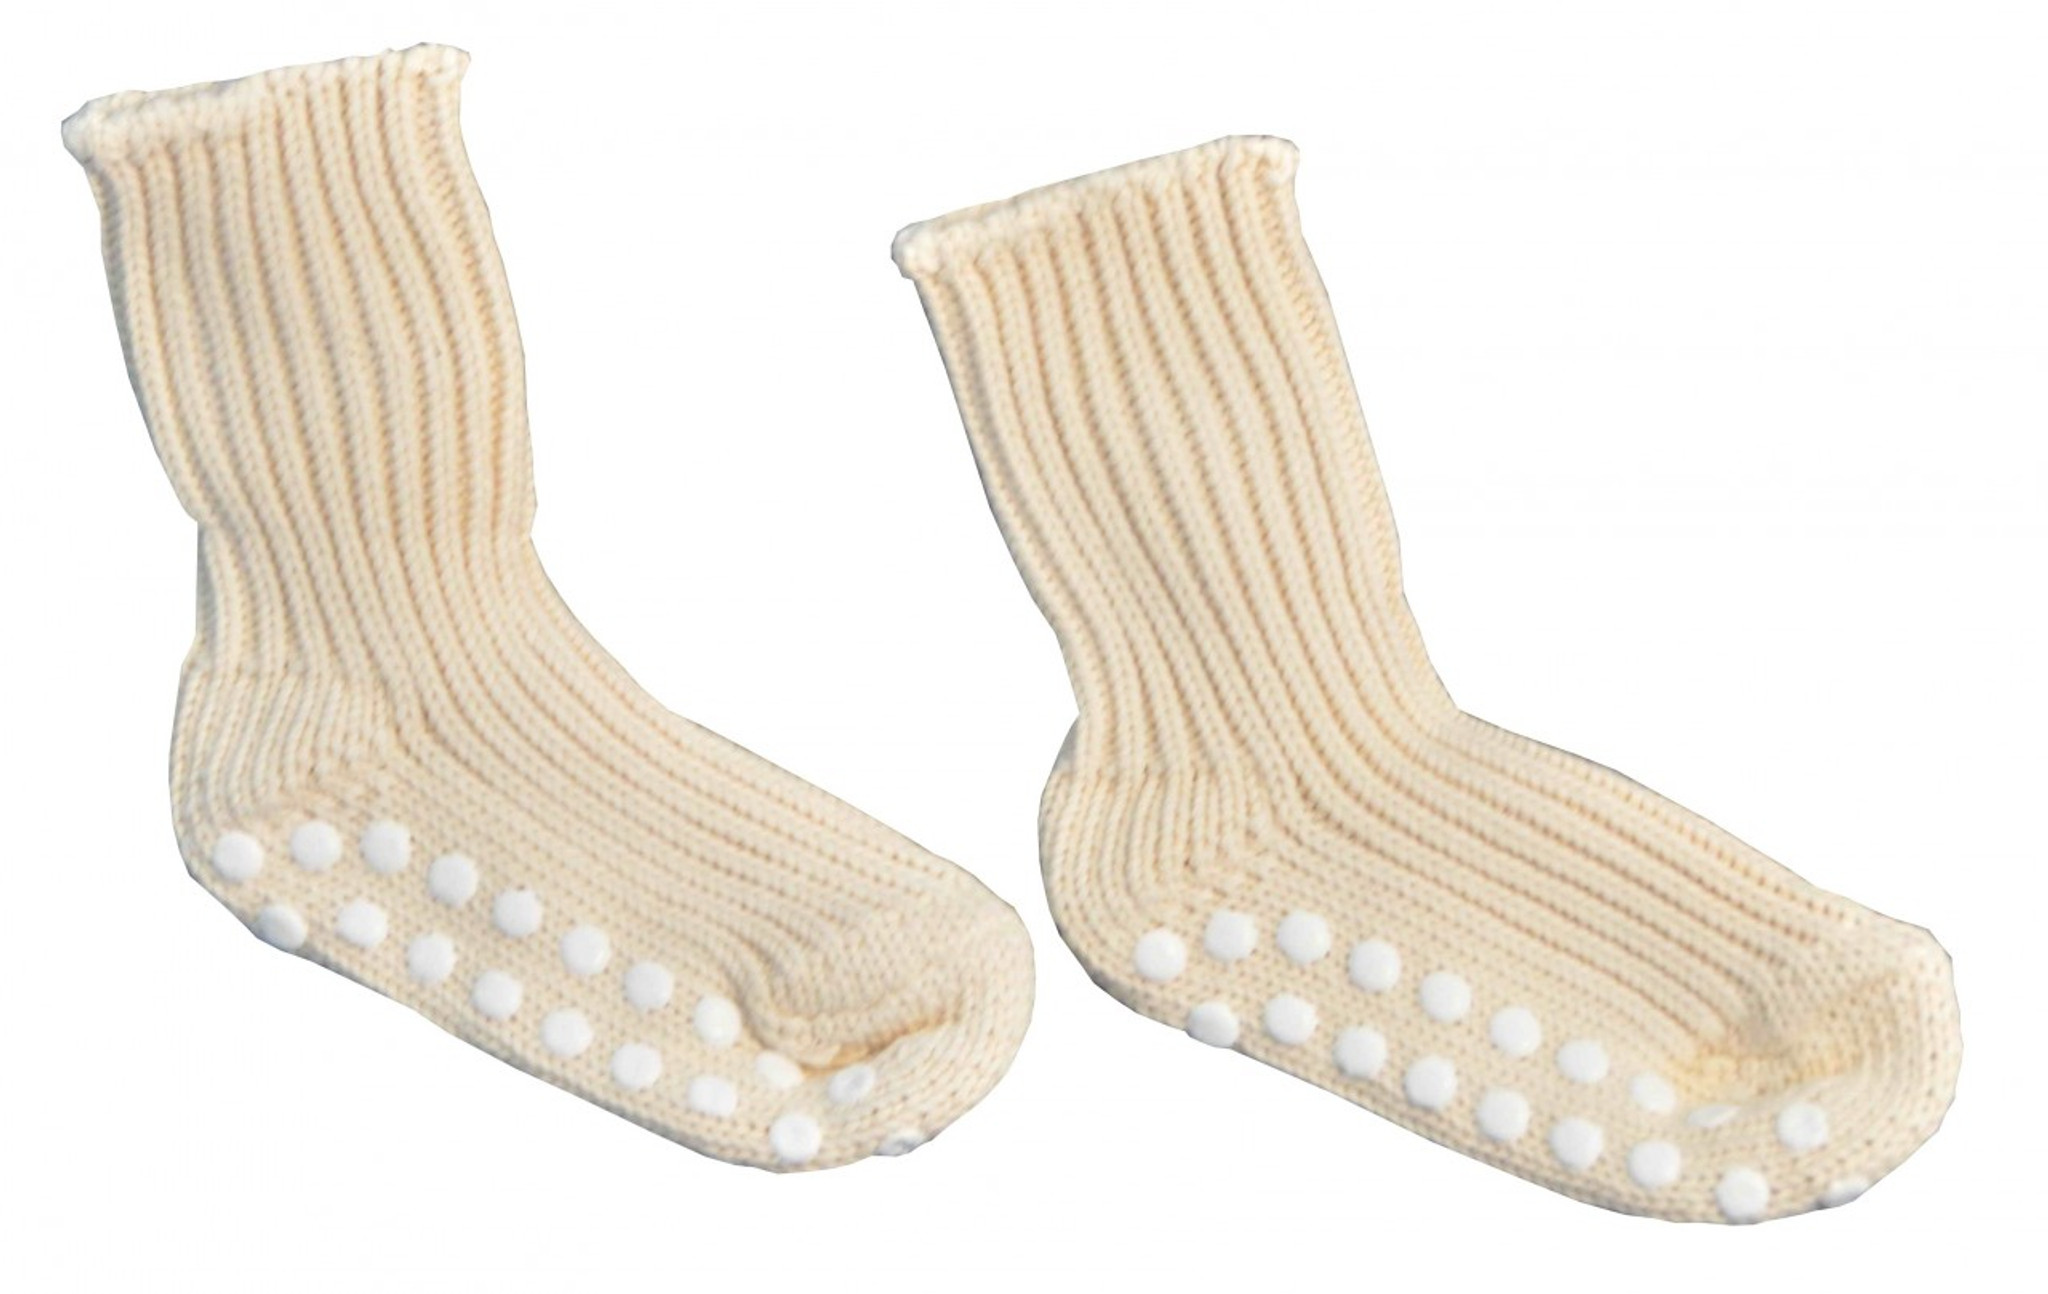 wool socks with grips